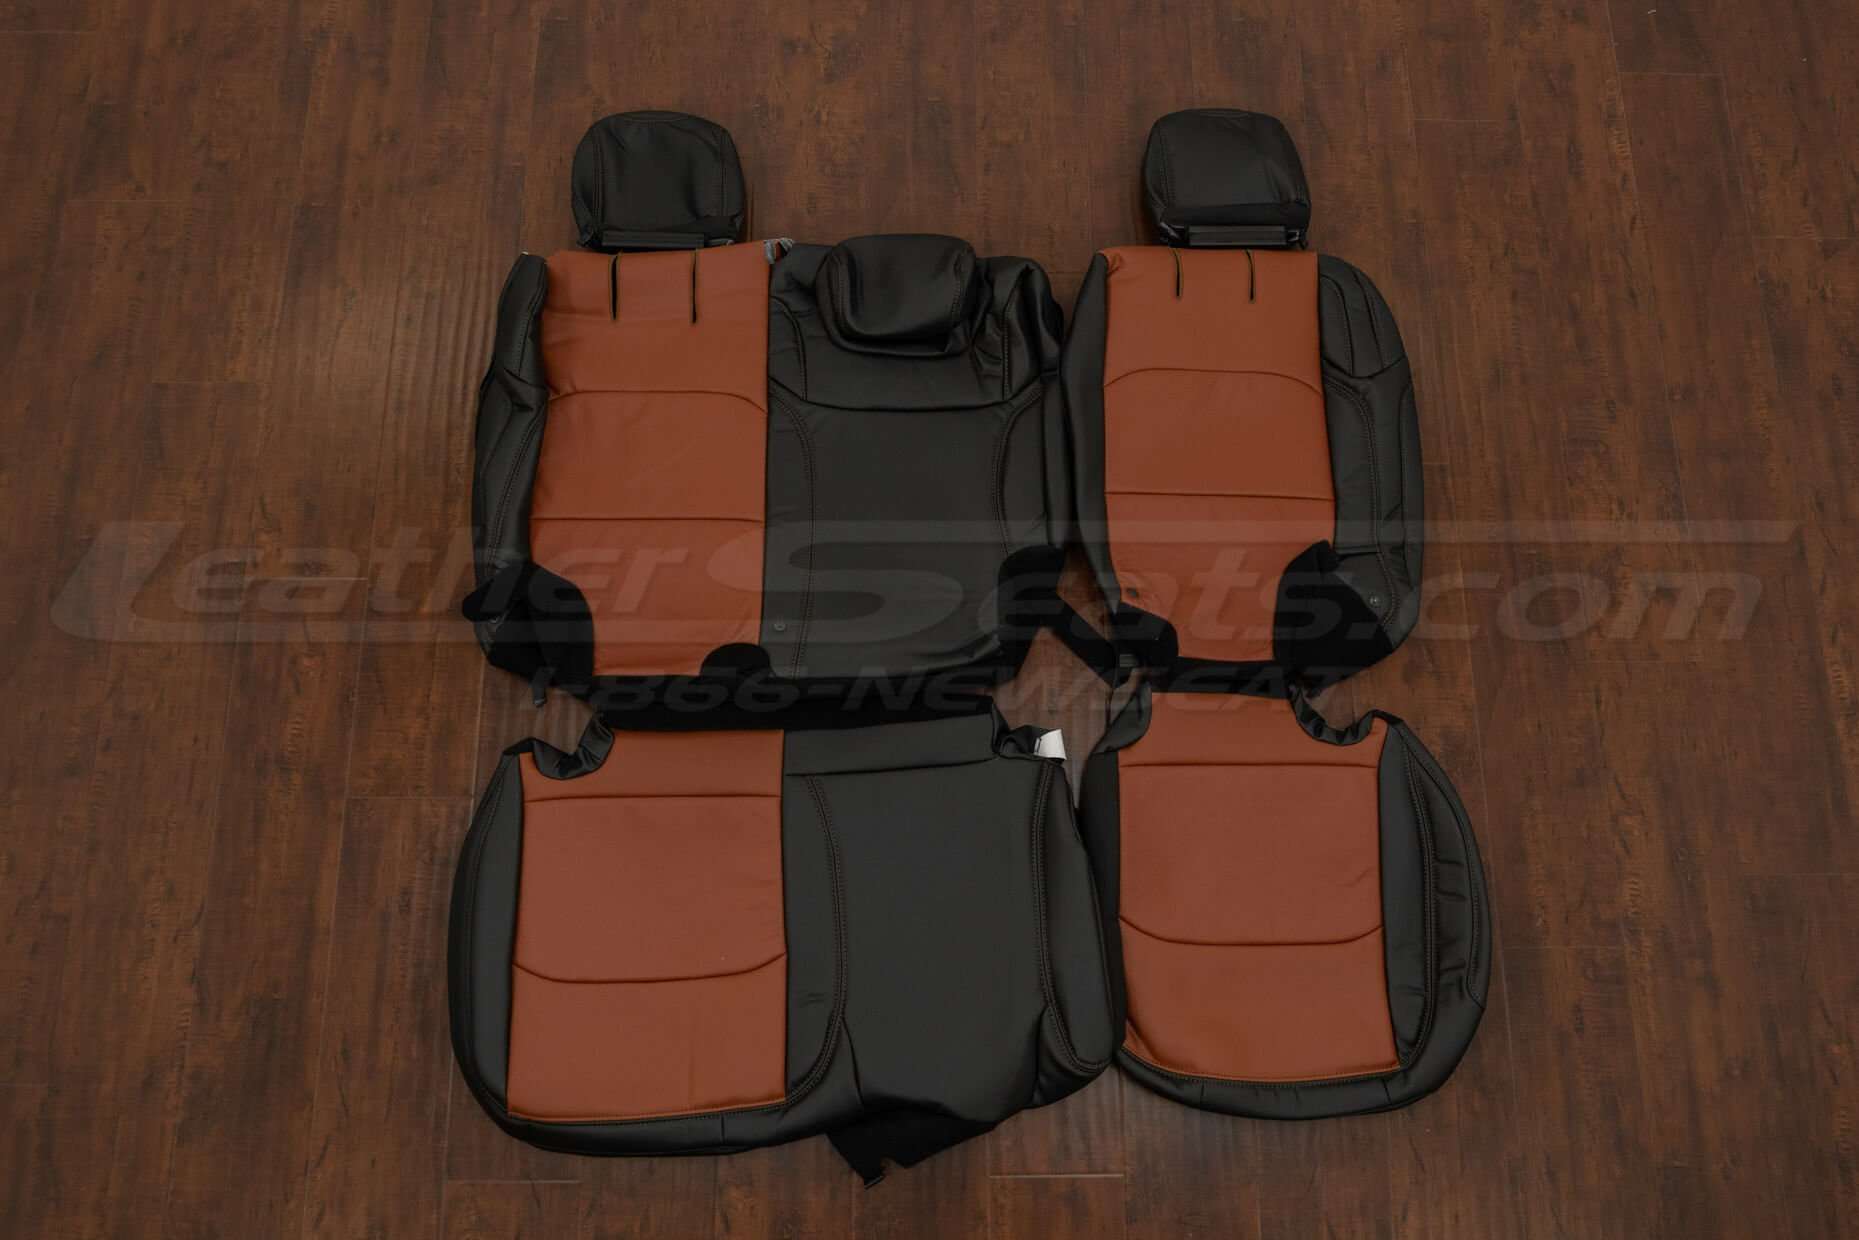 Jeep Wrangler JL Leather Seat Kit - Black & Mitt Brown - Rear seat upholstery